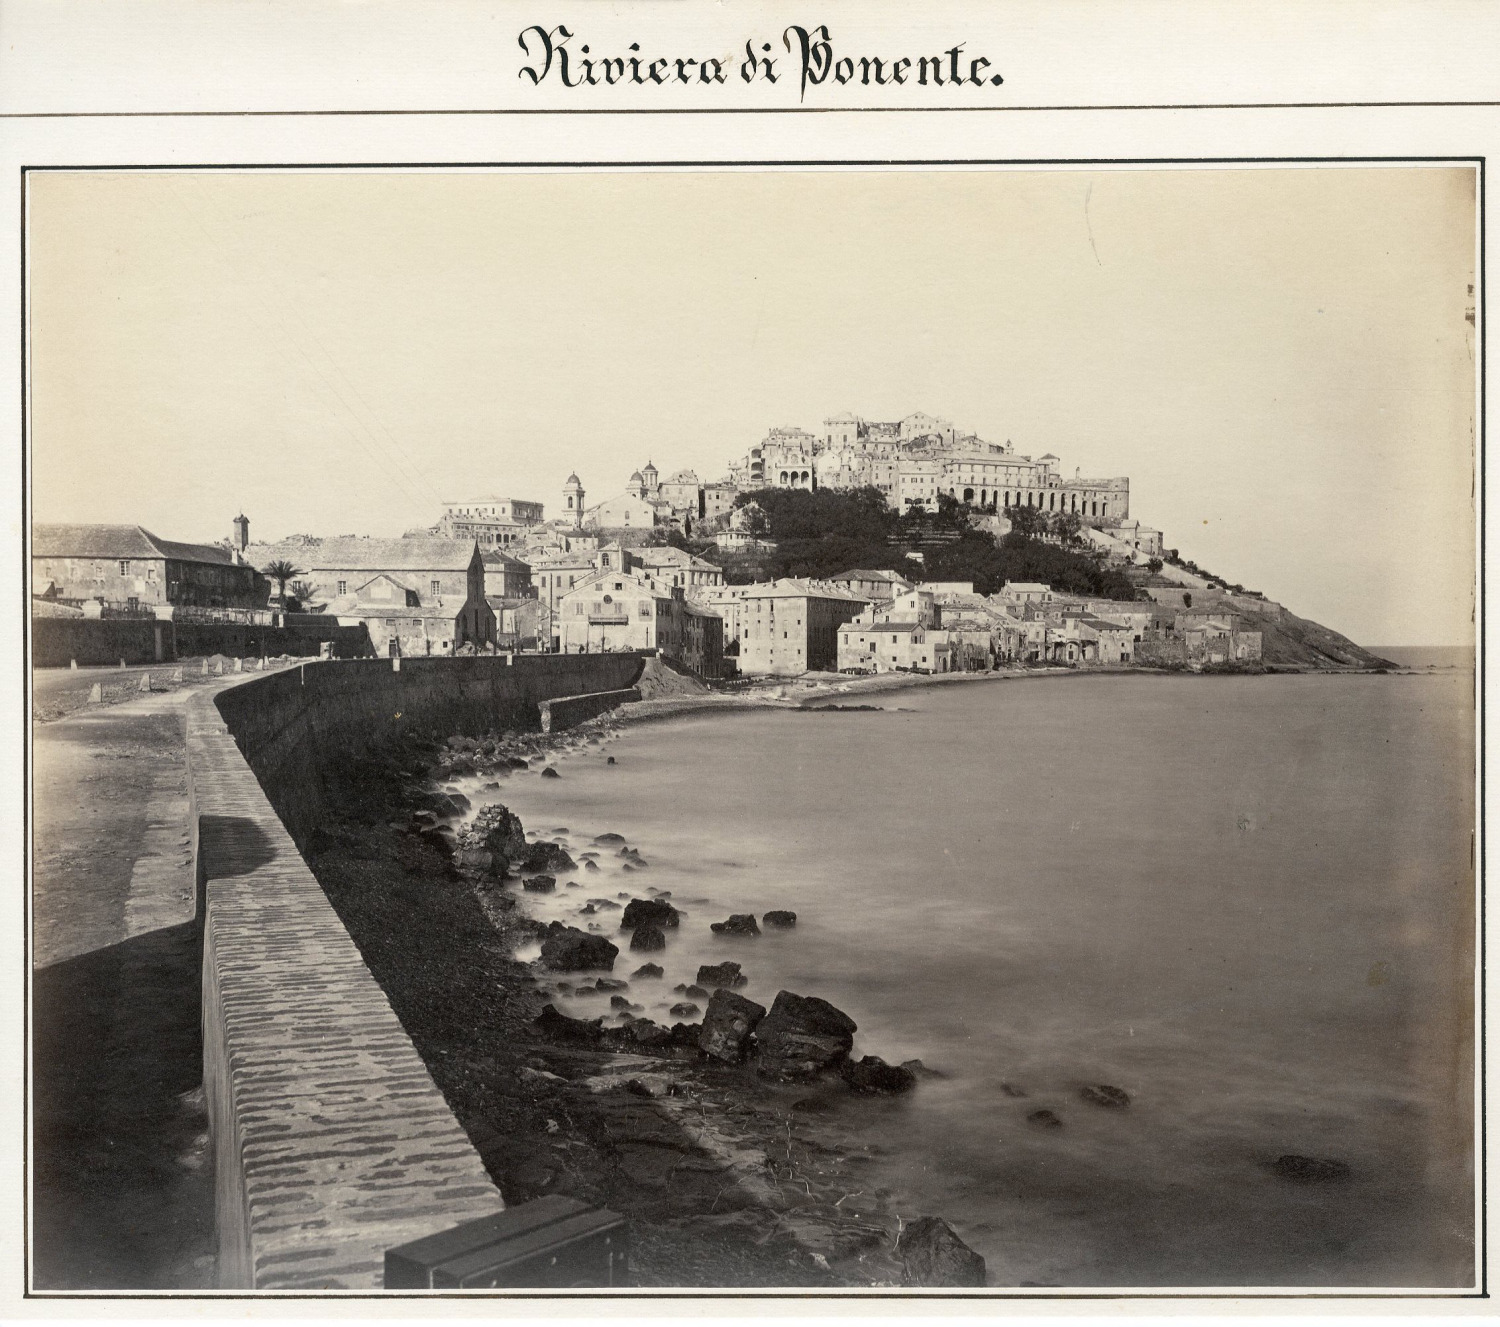 Italy, Riviera di Ponente vintage albumen print. Vintage Italy Albumin Print